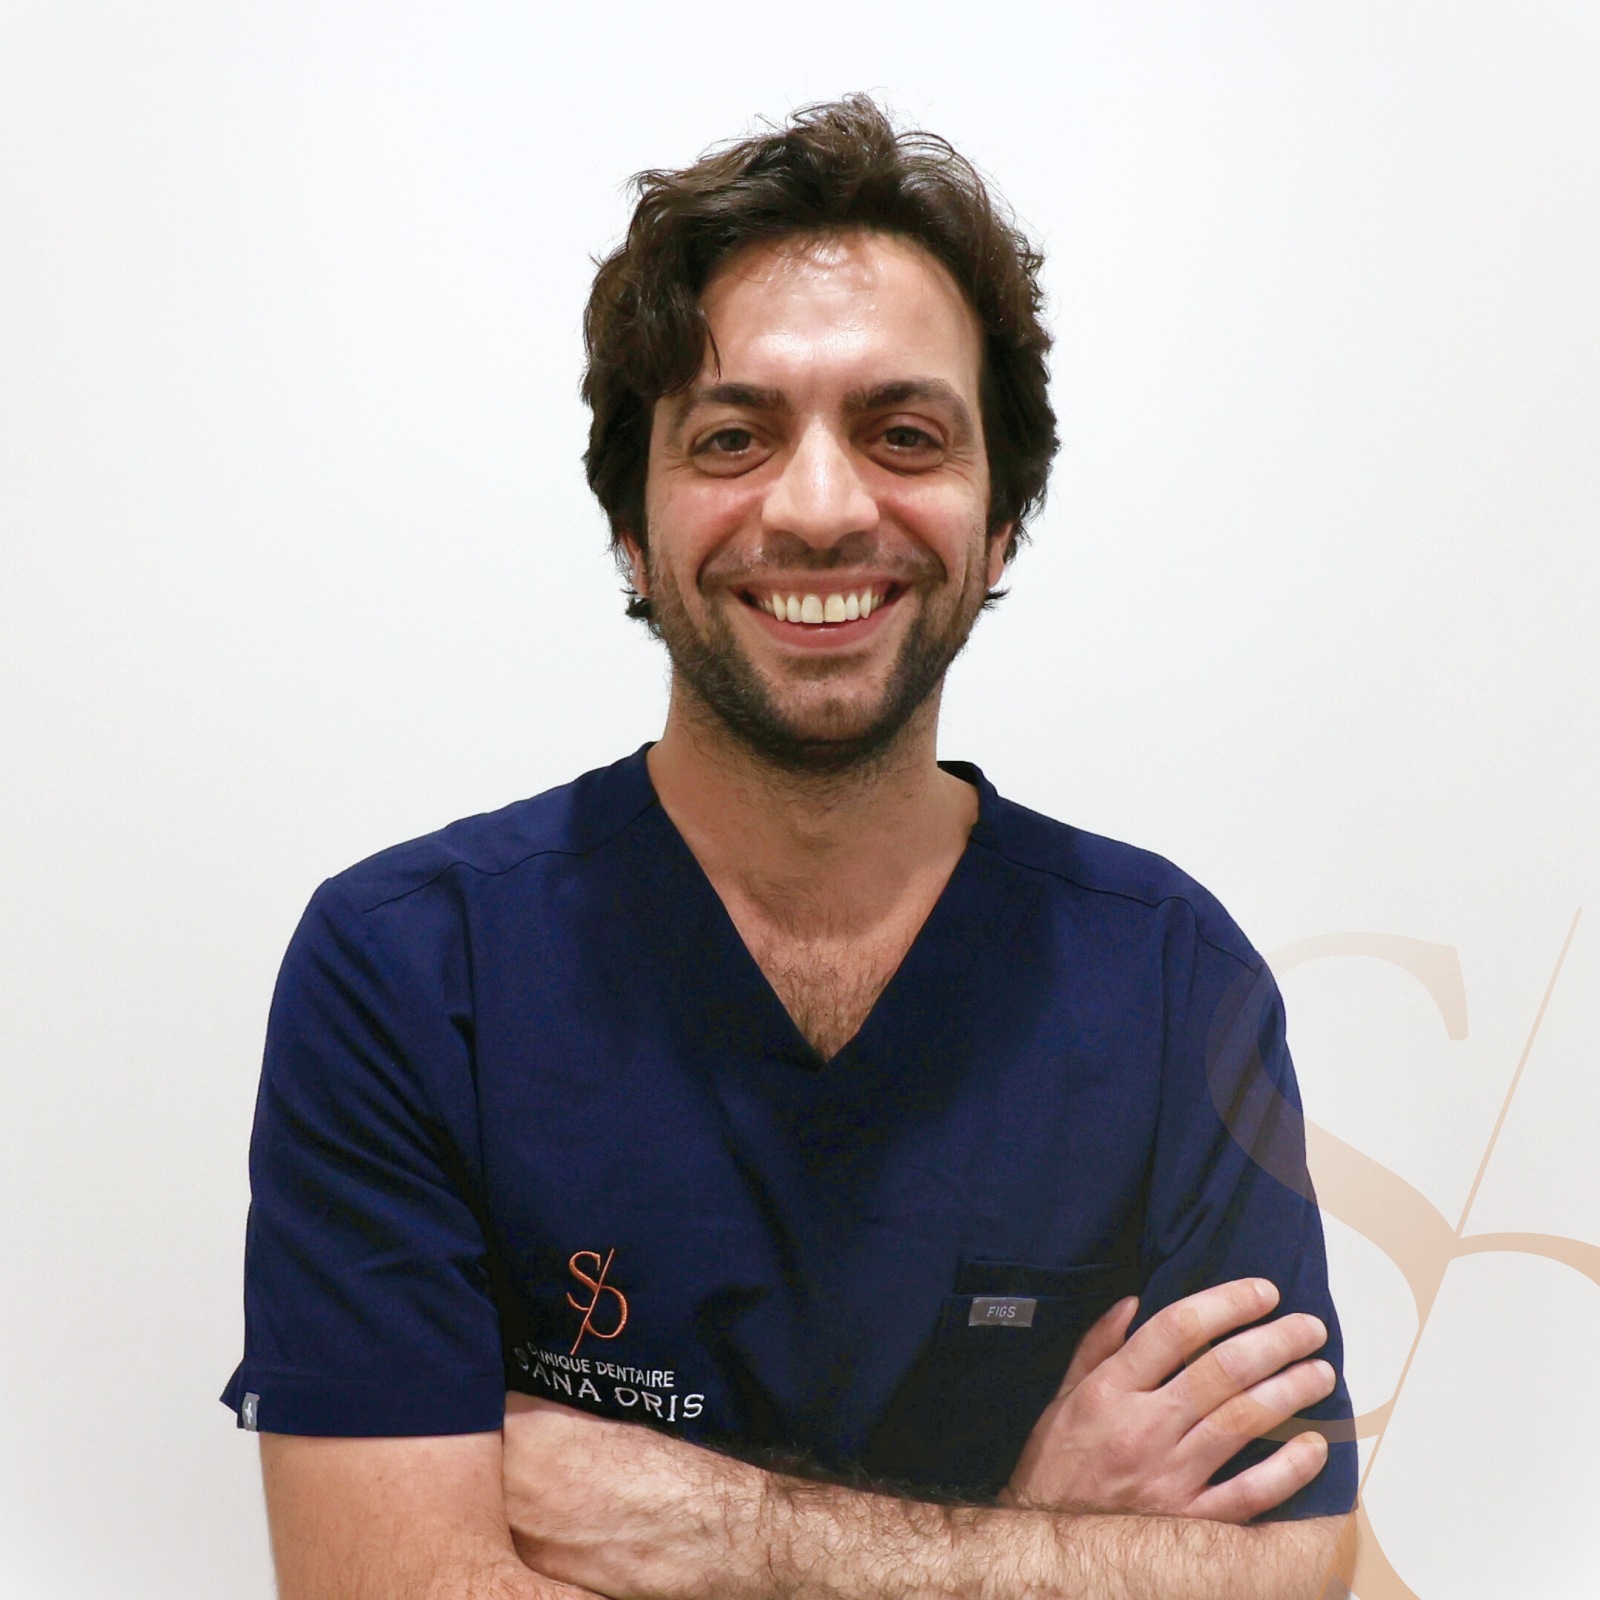 Dr Russo | Equipe médicale | Clinique dentaire Sana Oris du Marais | Chirurgiens dentistes | Paris 4